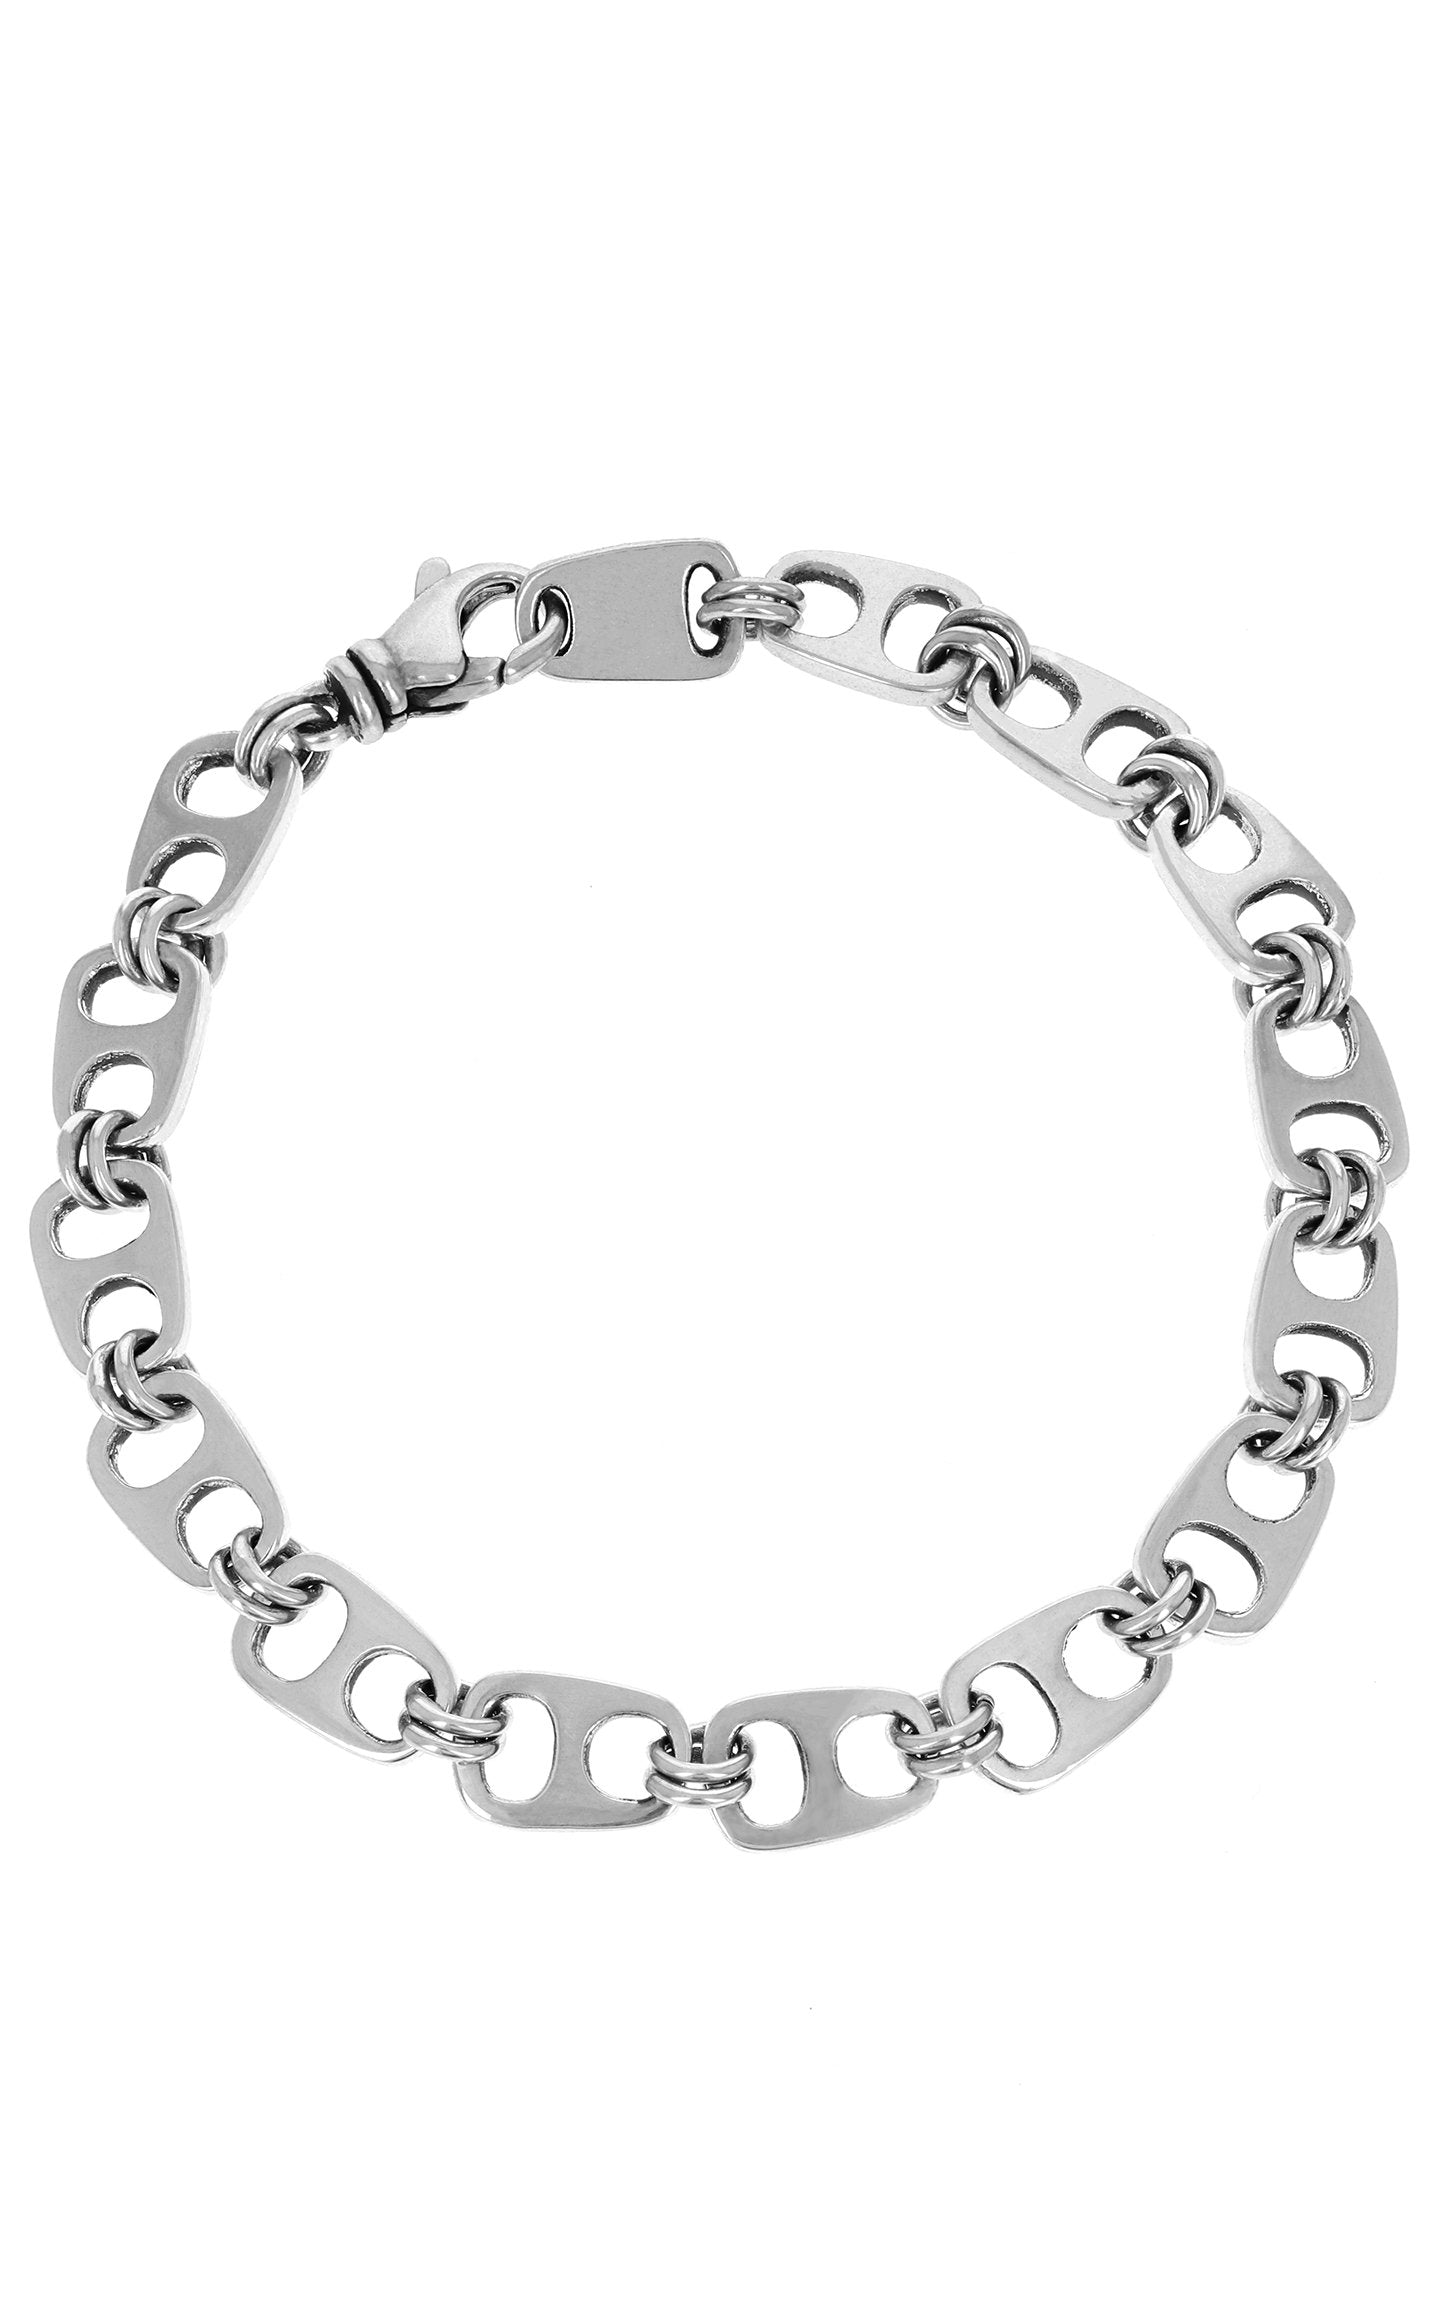 King Baby sterling silver bracelet